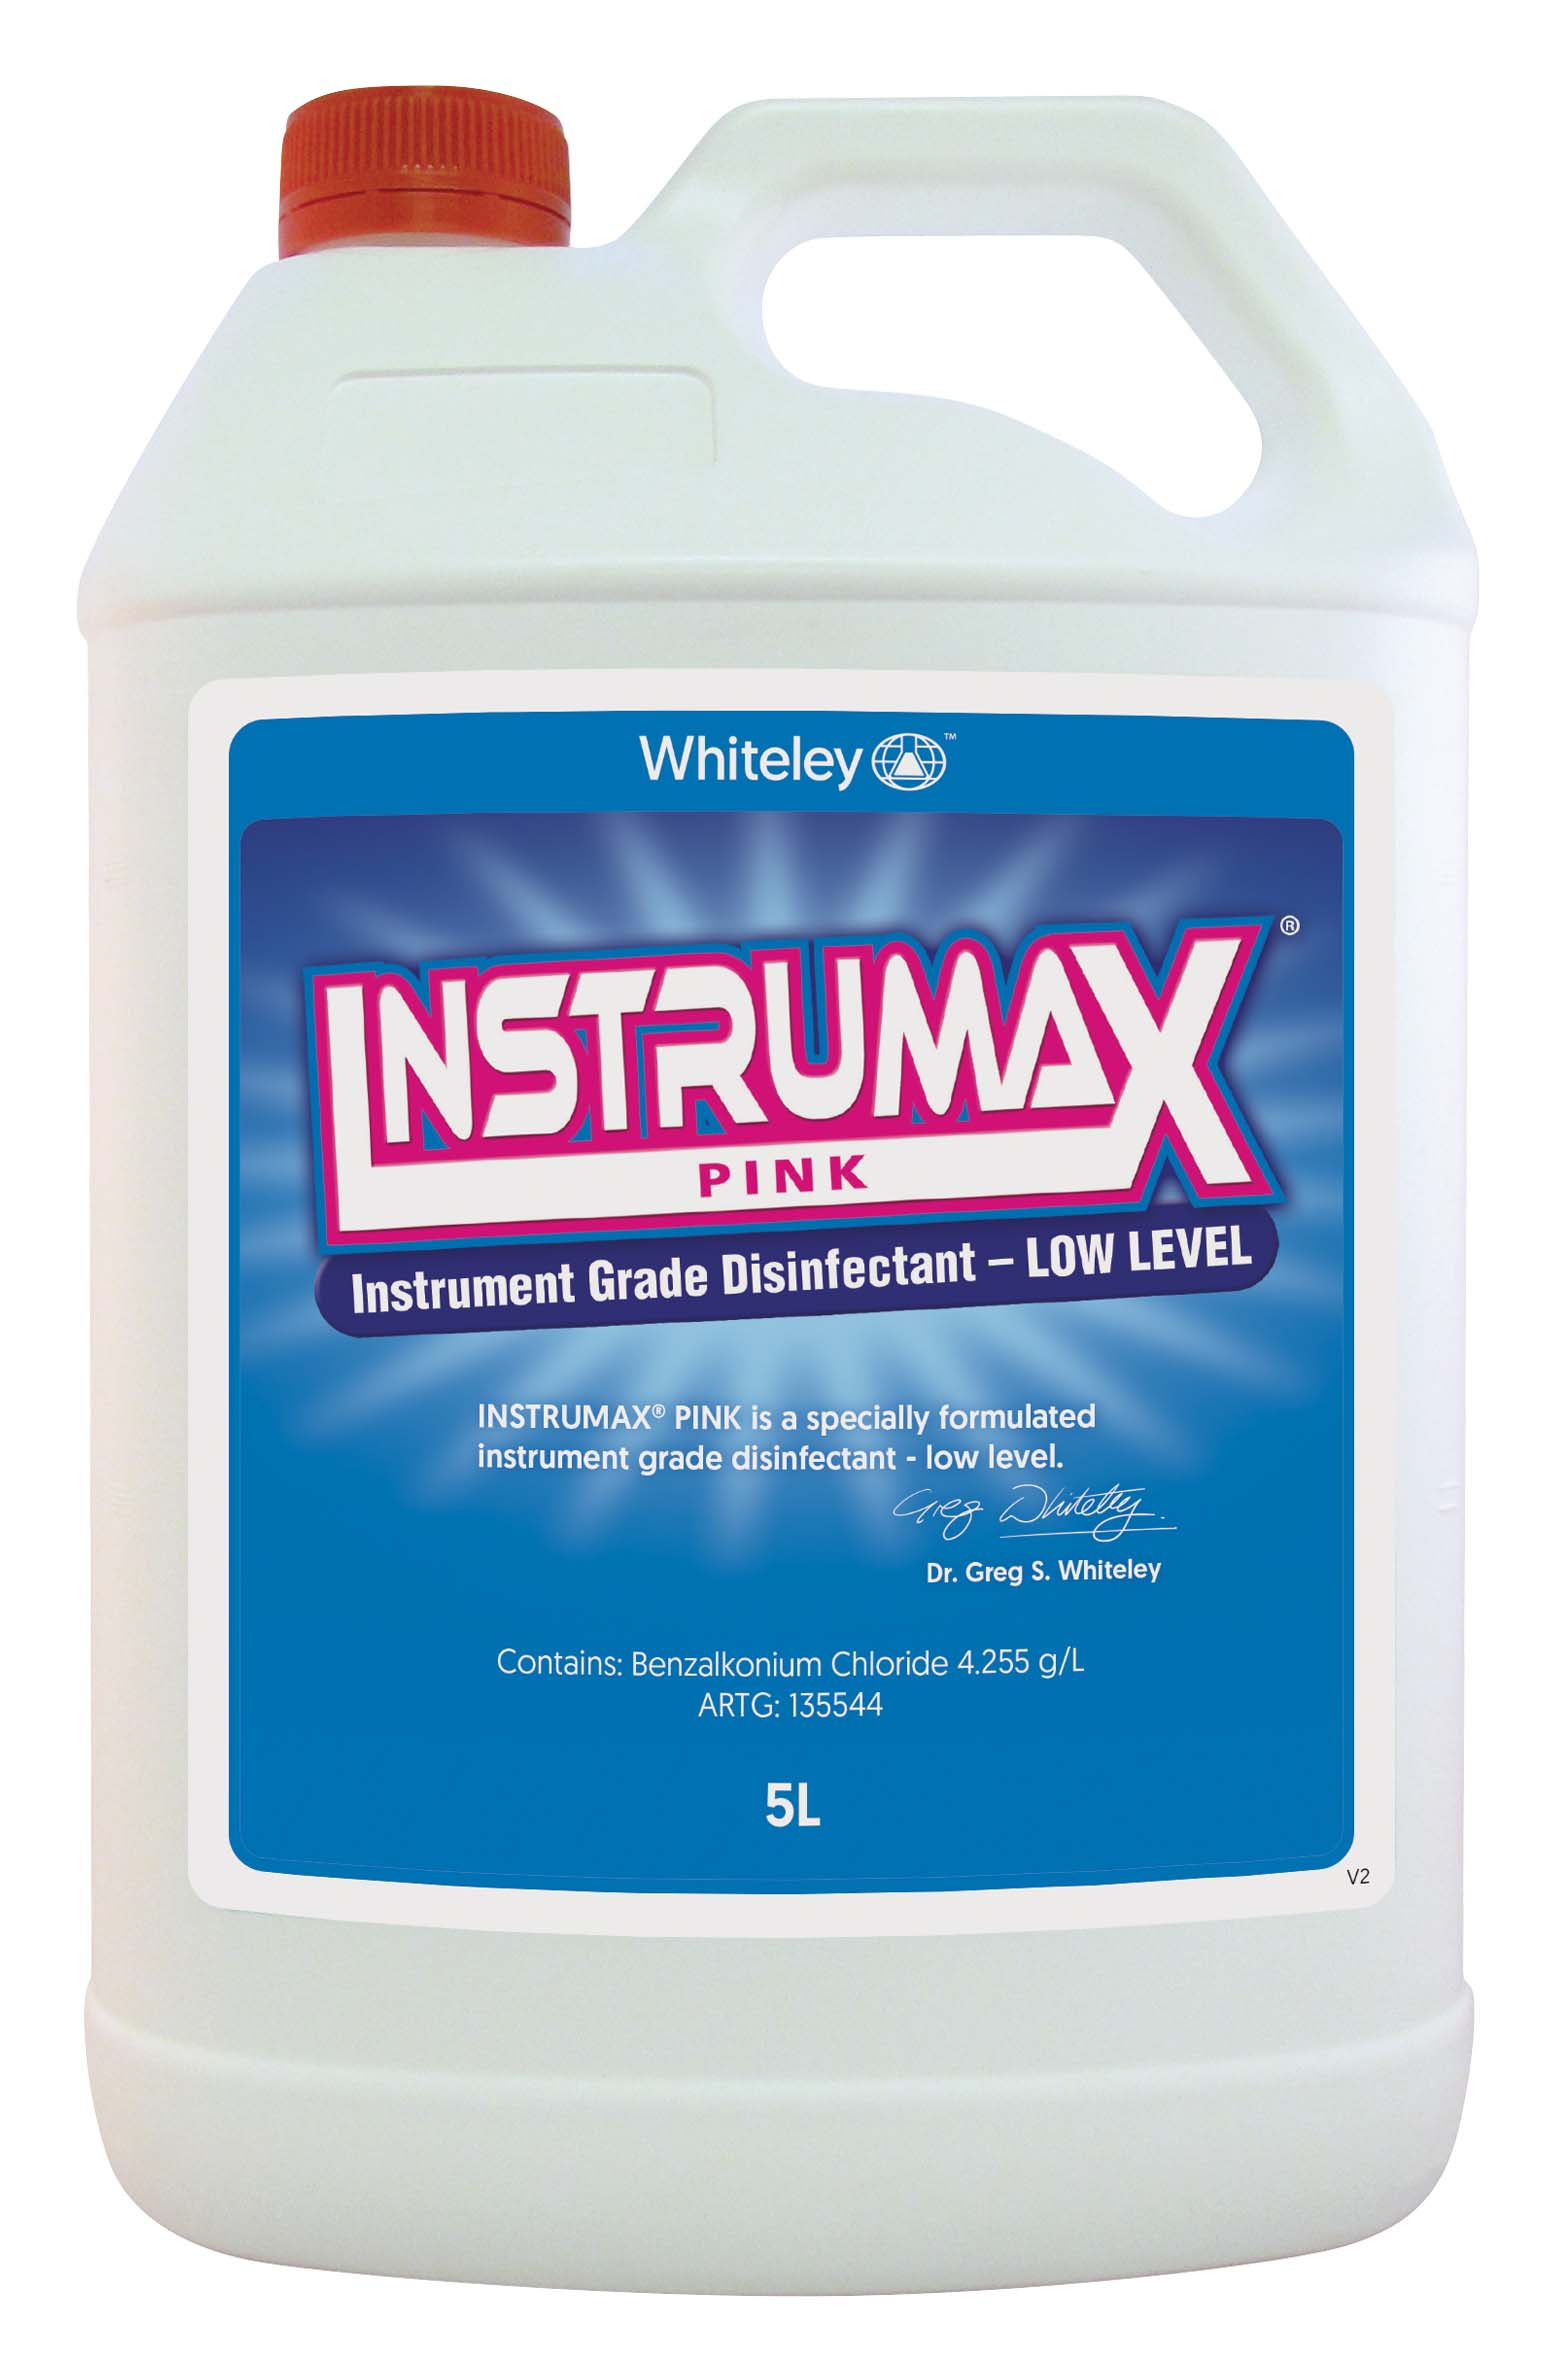 Whiteley Instrumax Pink Instrument disinfectant 5 Litre